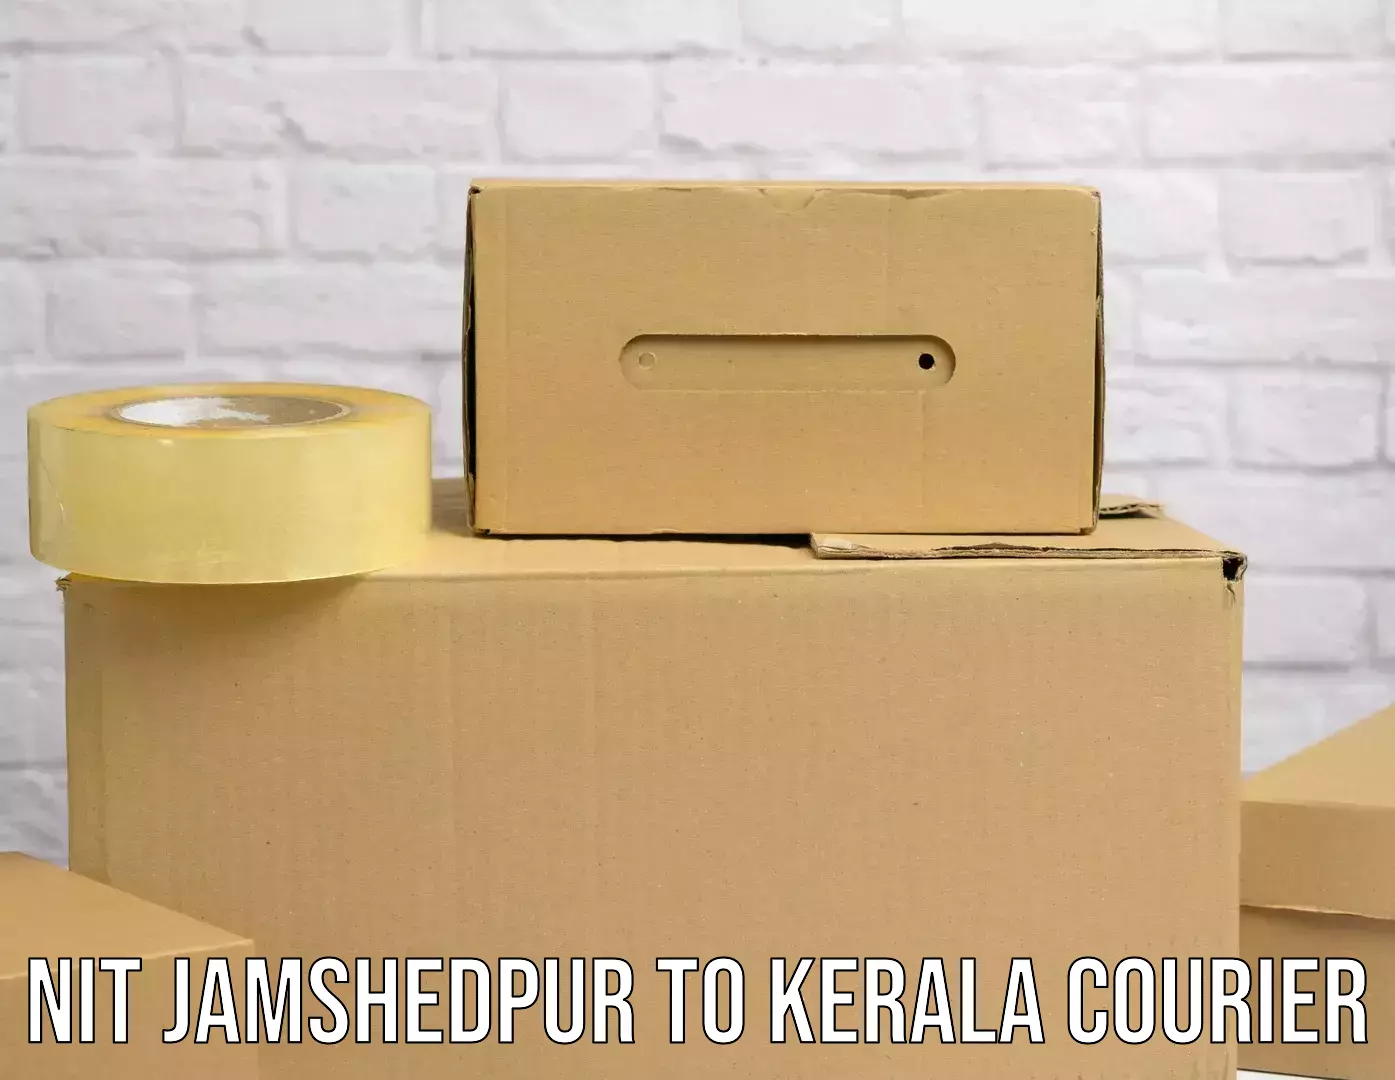 User-friendly delivery service NIT Jamshedpur to Karunagappally